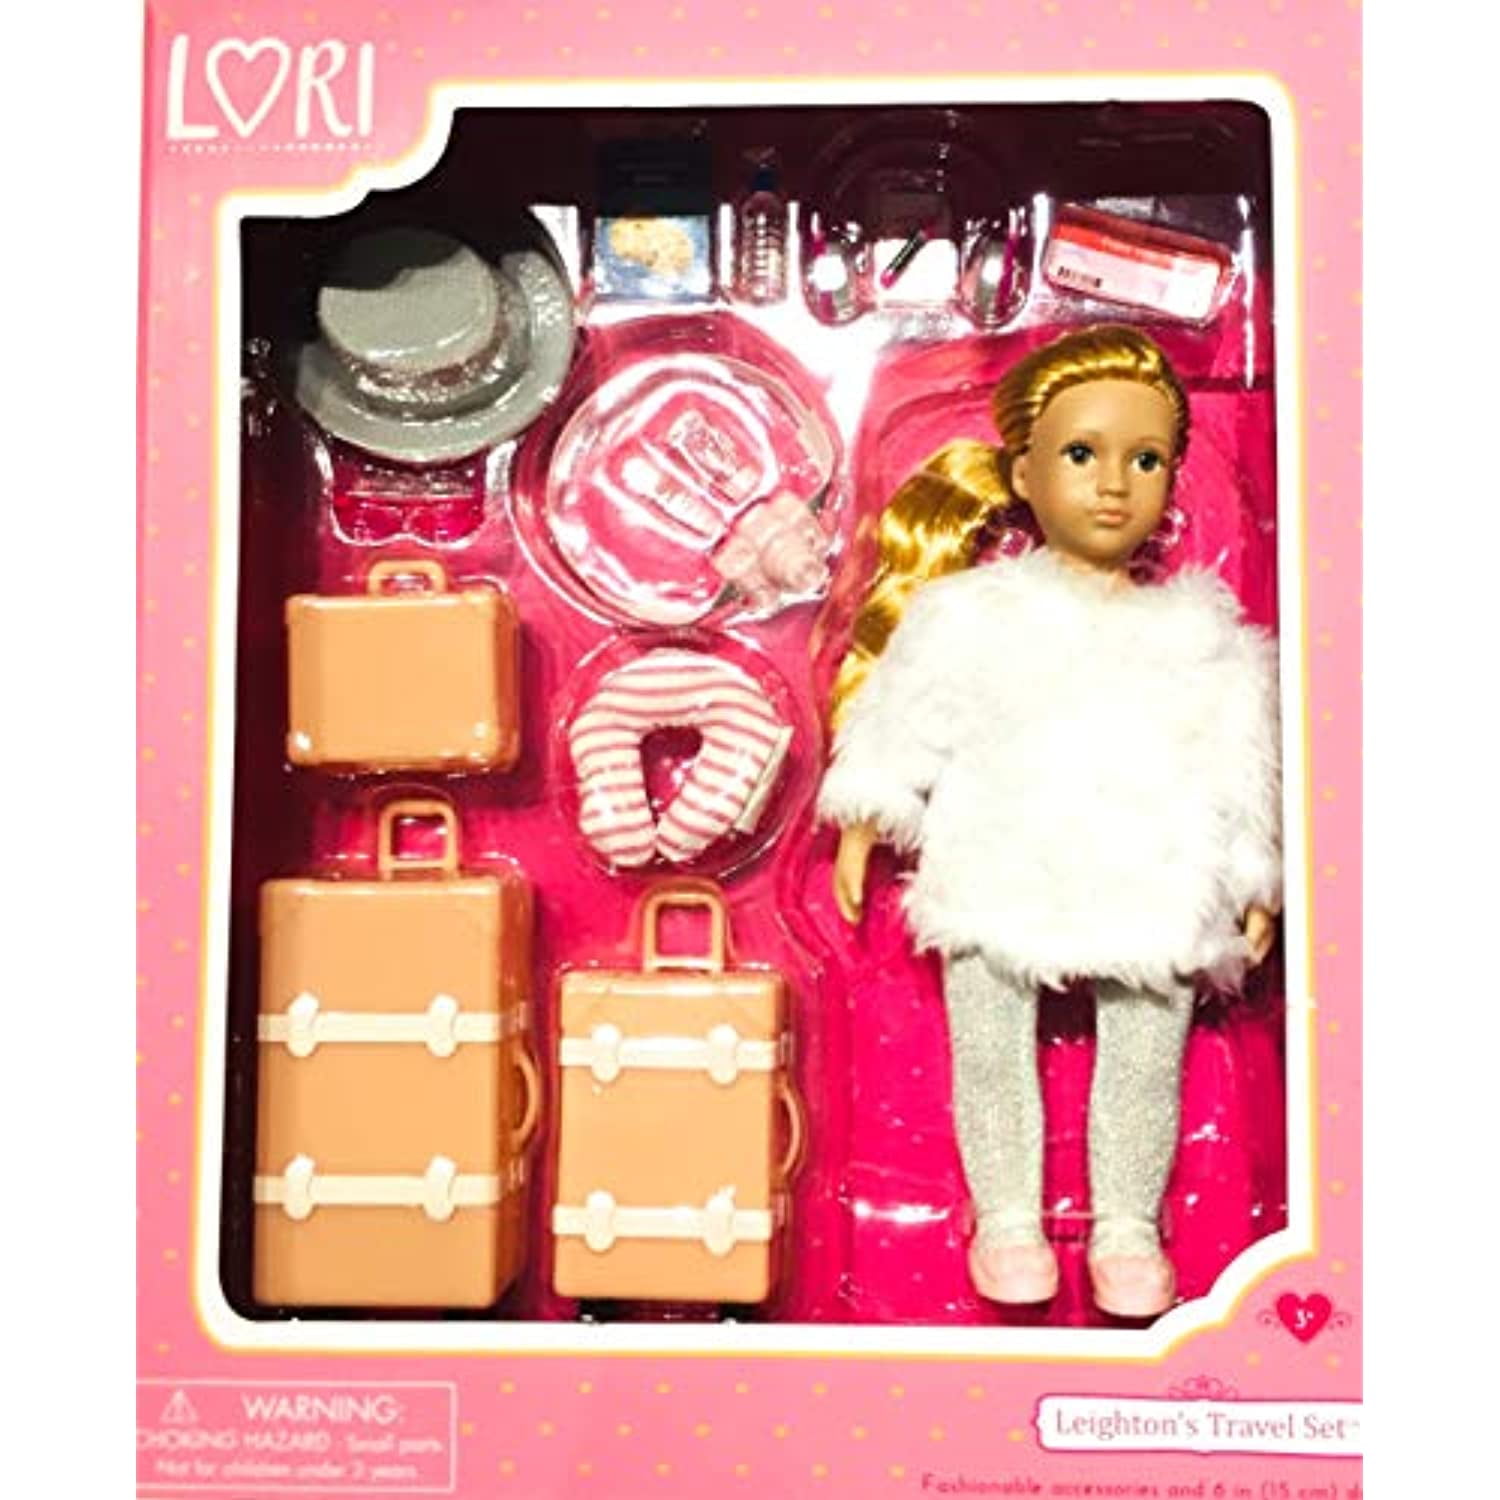 LORI Doll Leighton's Travel Set Battat Our Generation 6" NEW in Box Fast Ship 